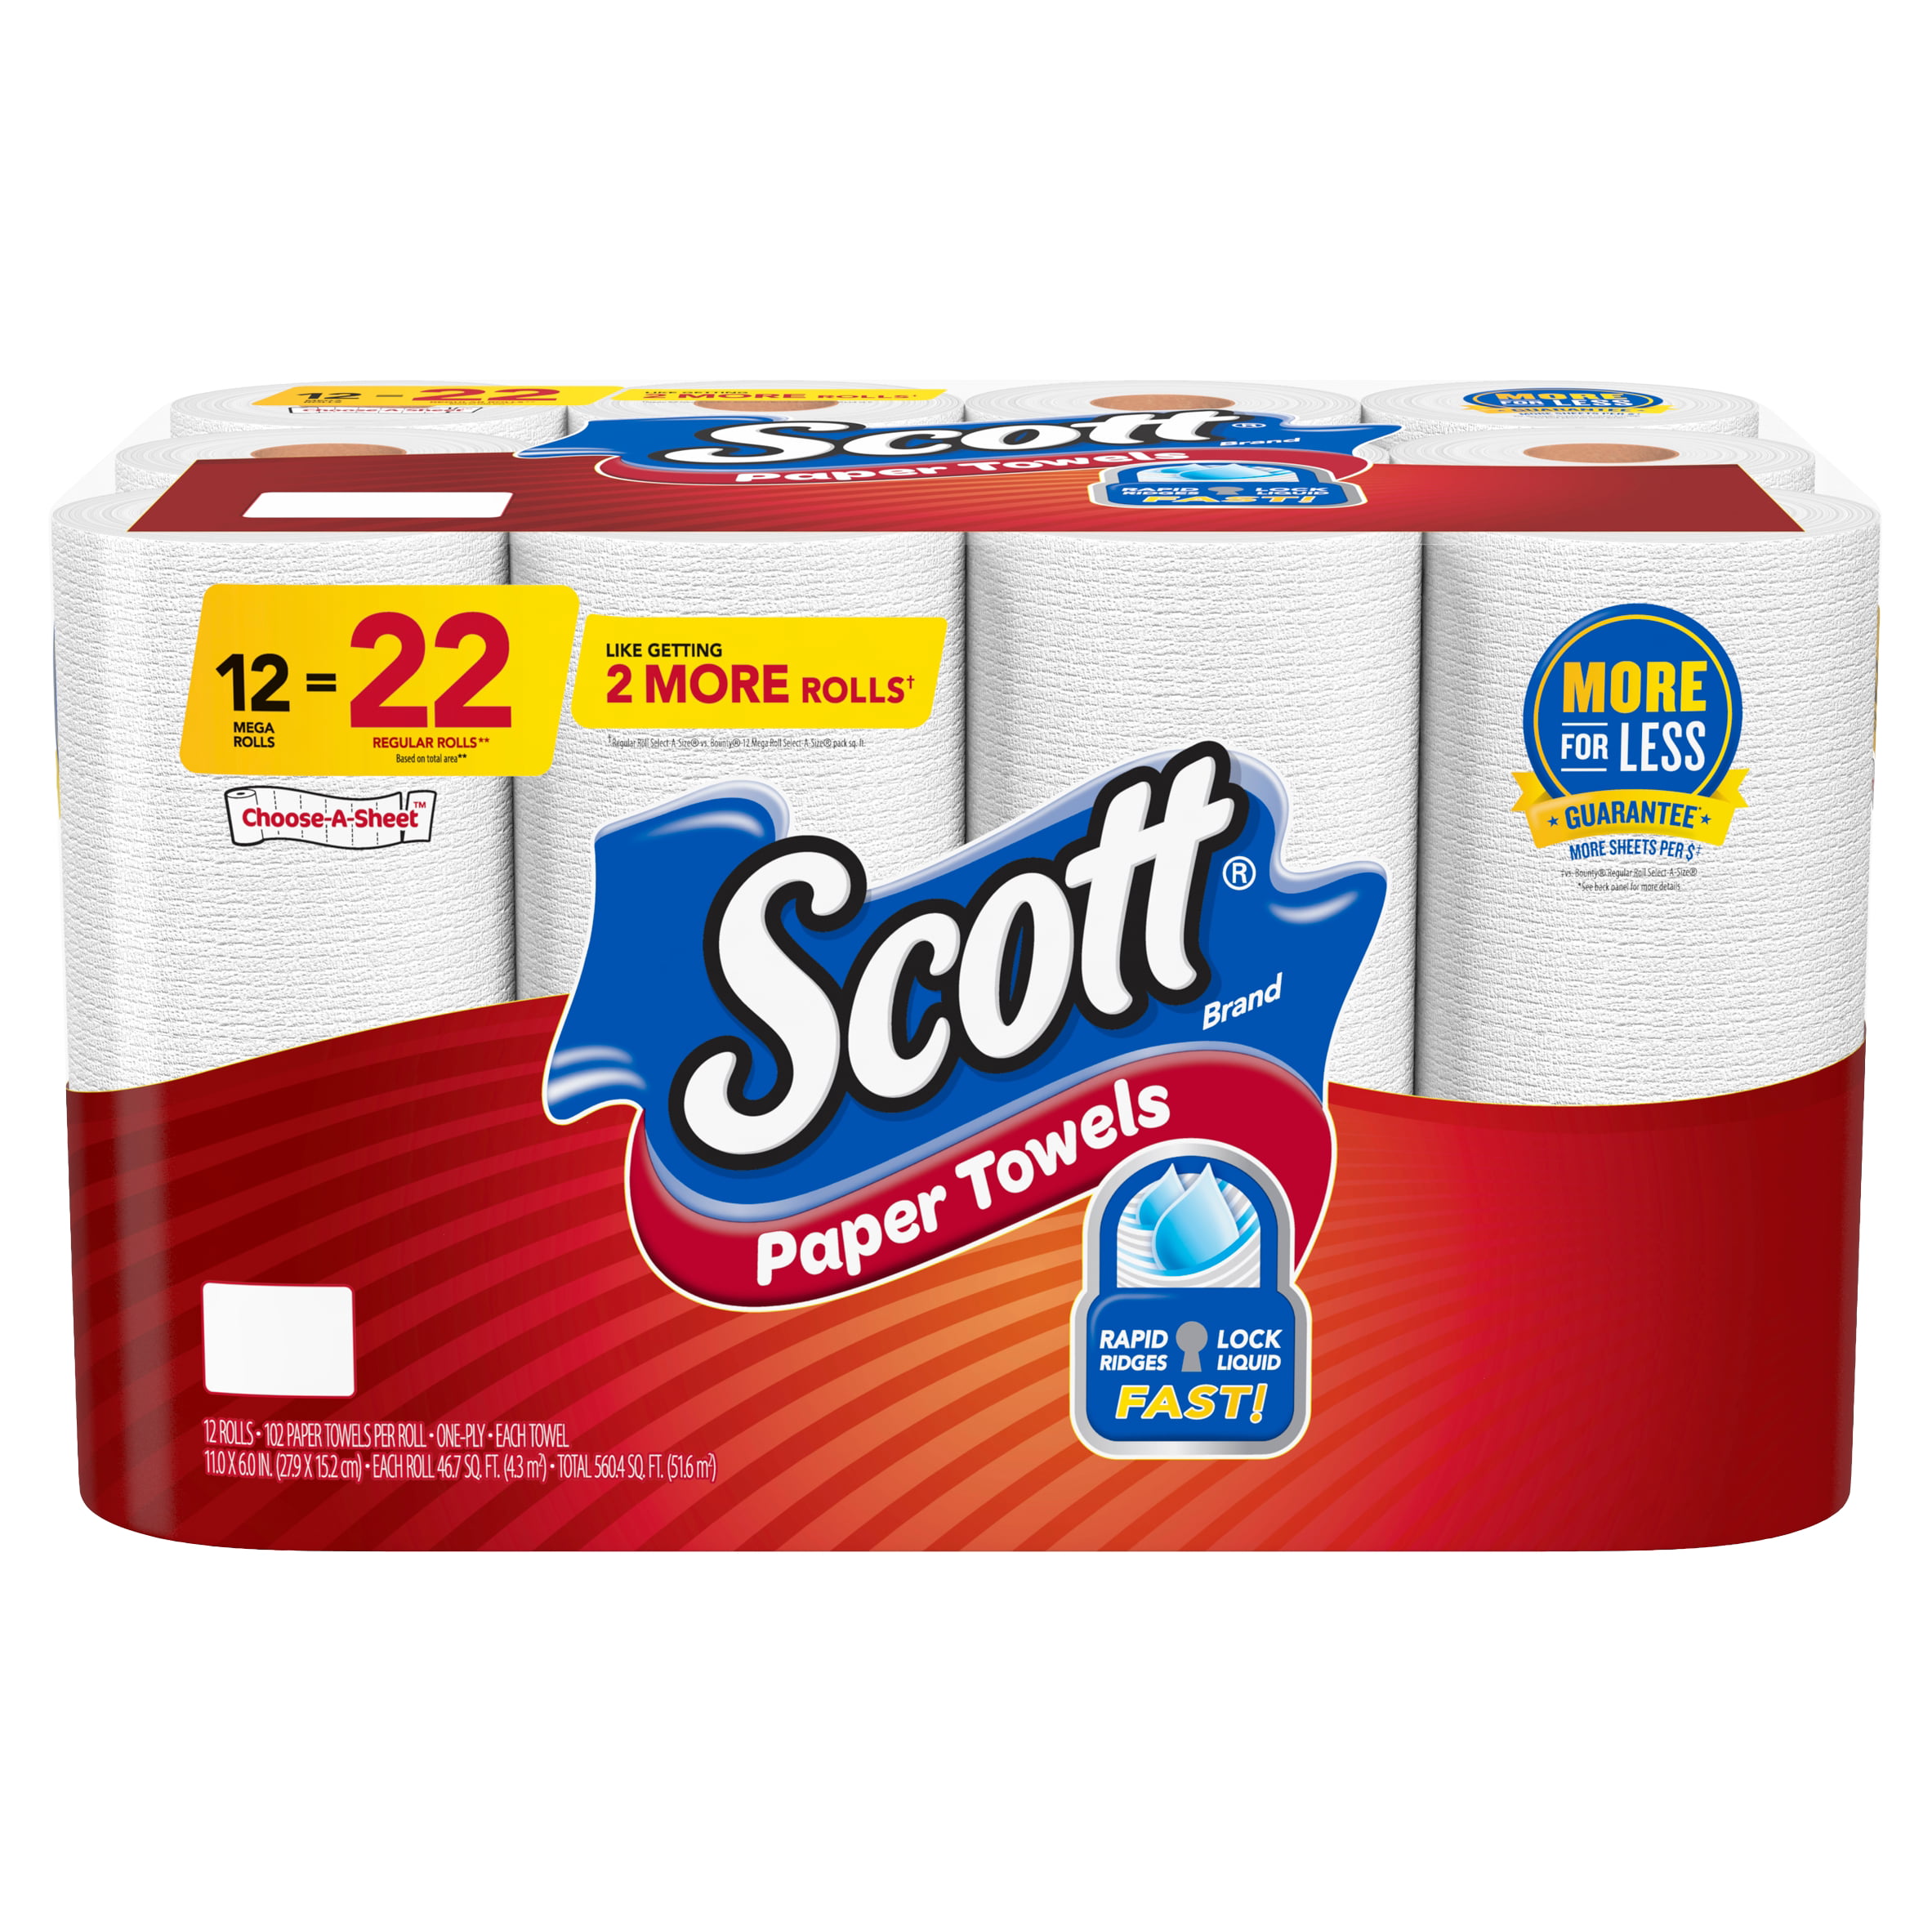 Scott Paper Towels Choose-A-Sheet 6 Double 12 Regular Rolls White